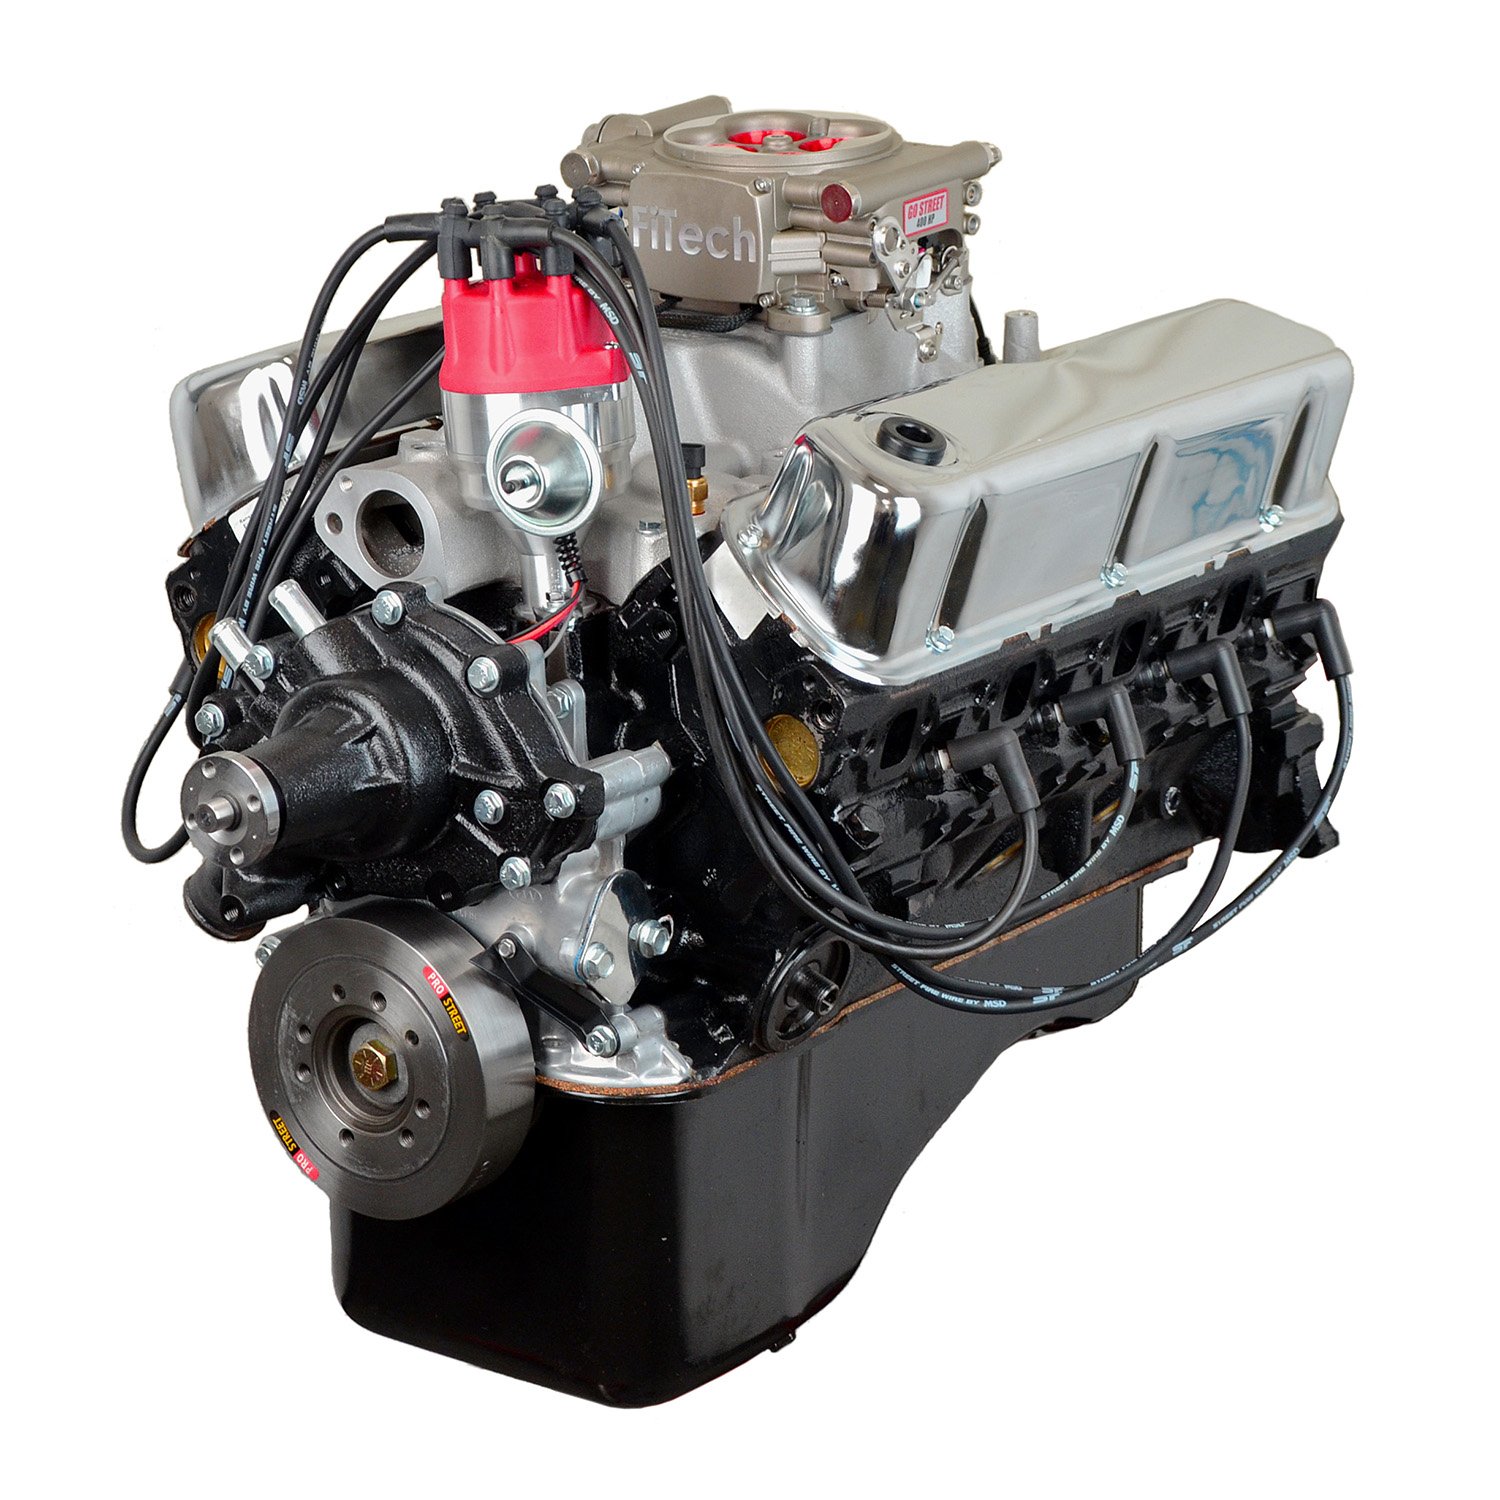 HP79C-EFI High Performance Crate Engine Small Block Ford 302ci / 300HP / 336TQ